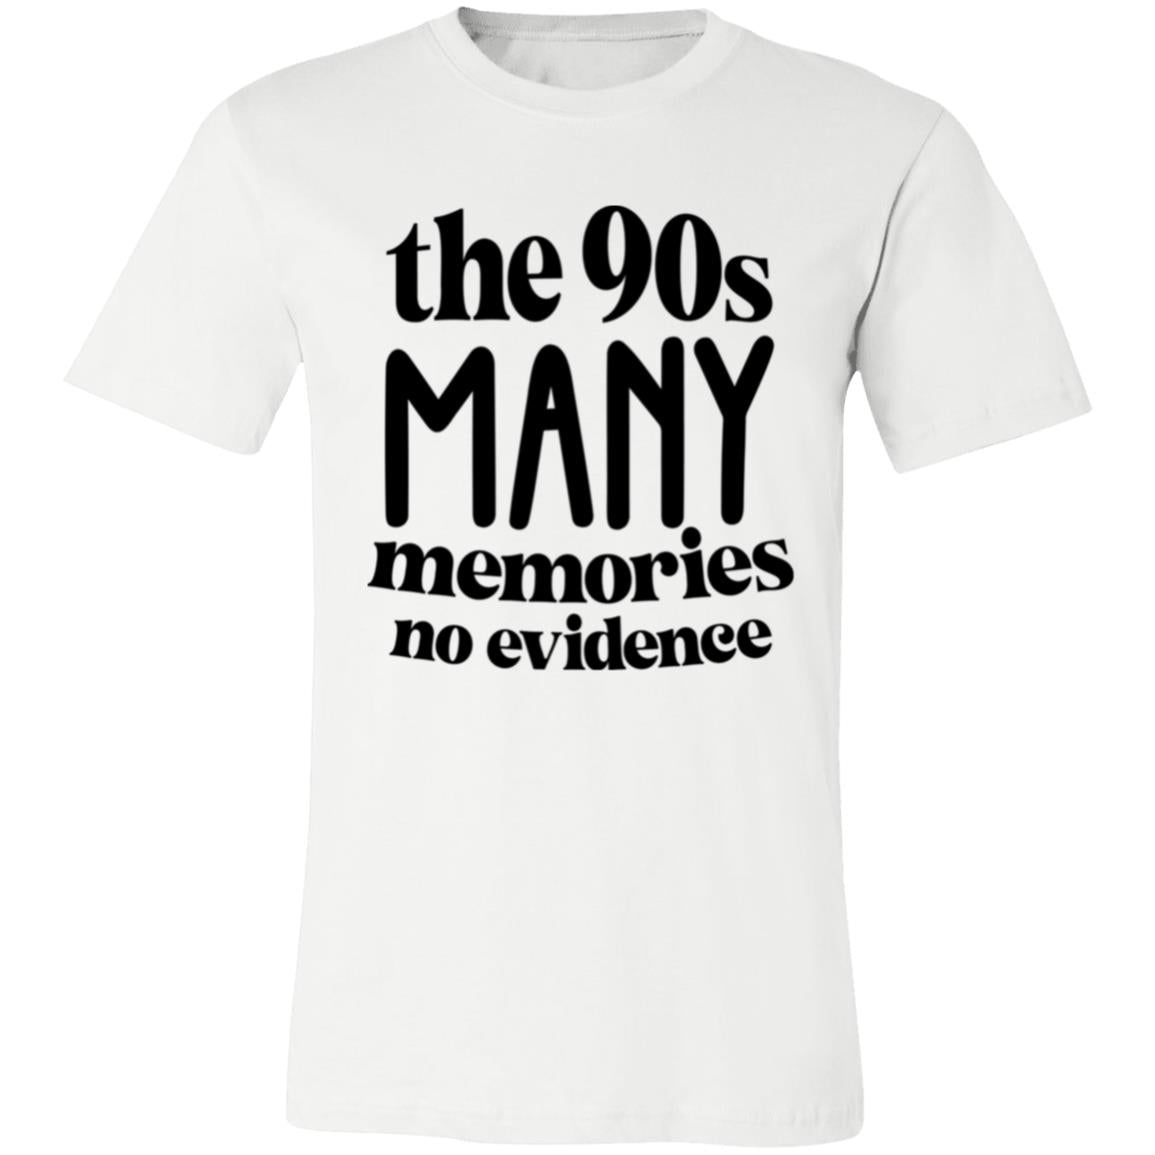 The 90s Many Memories No Evidence Unisex Jersey Short-Sleeve T-Shirt